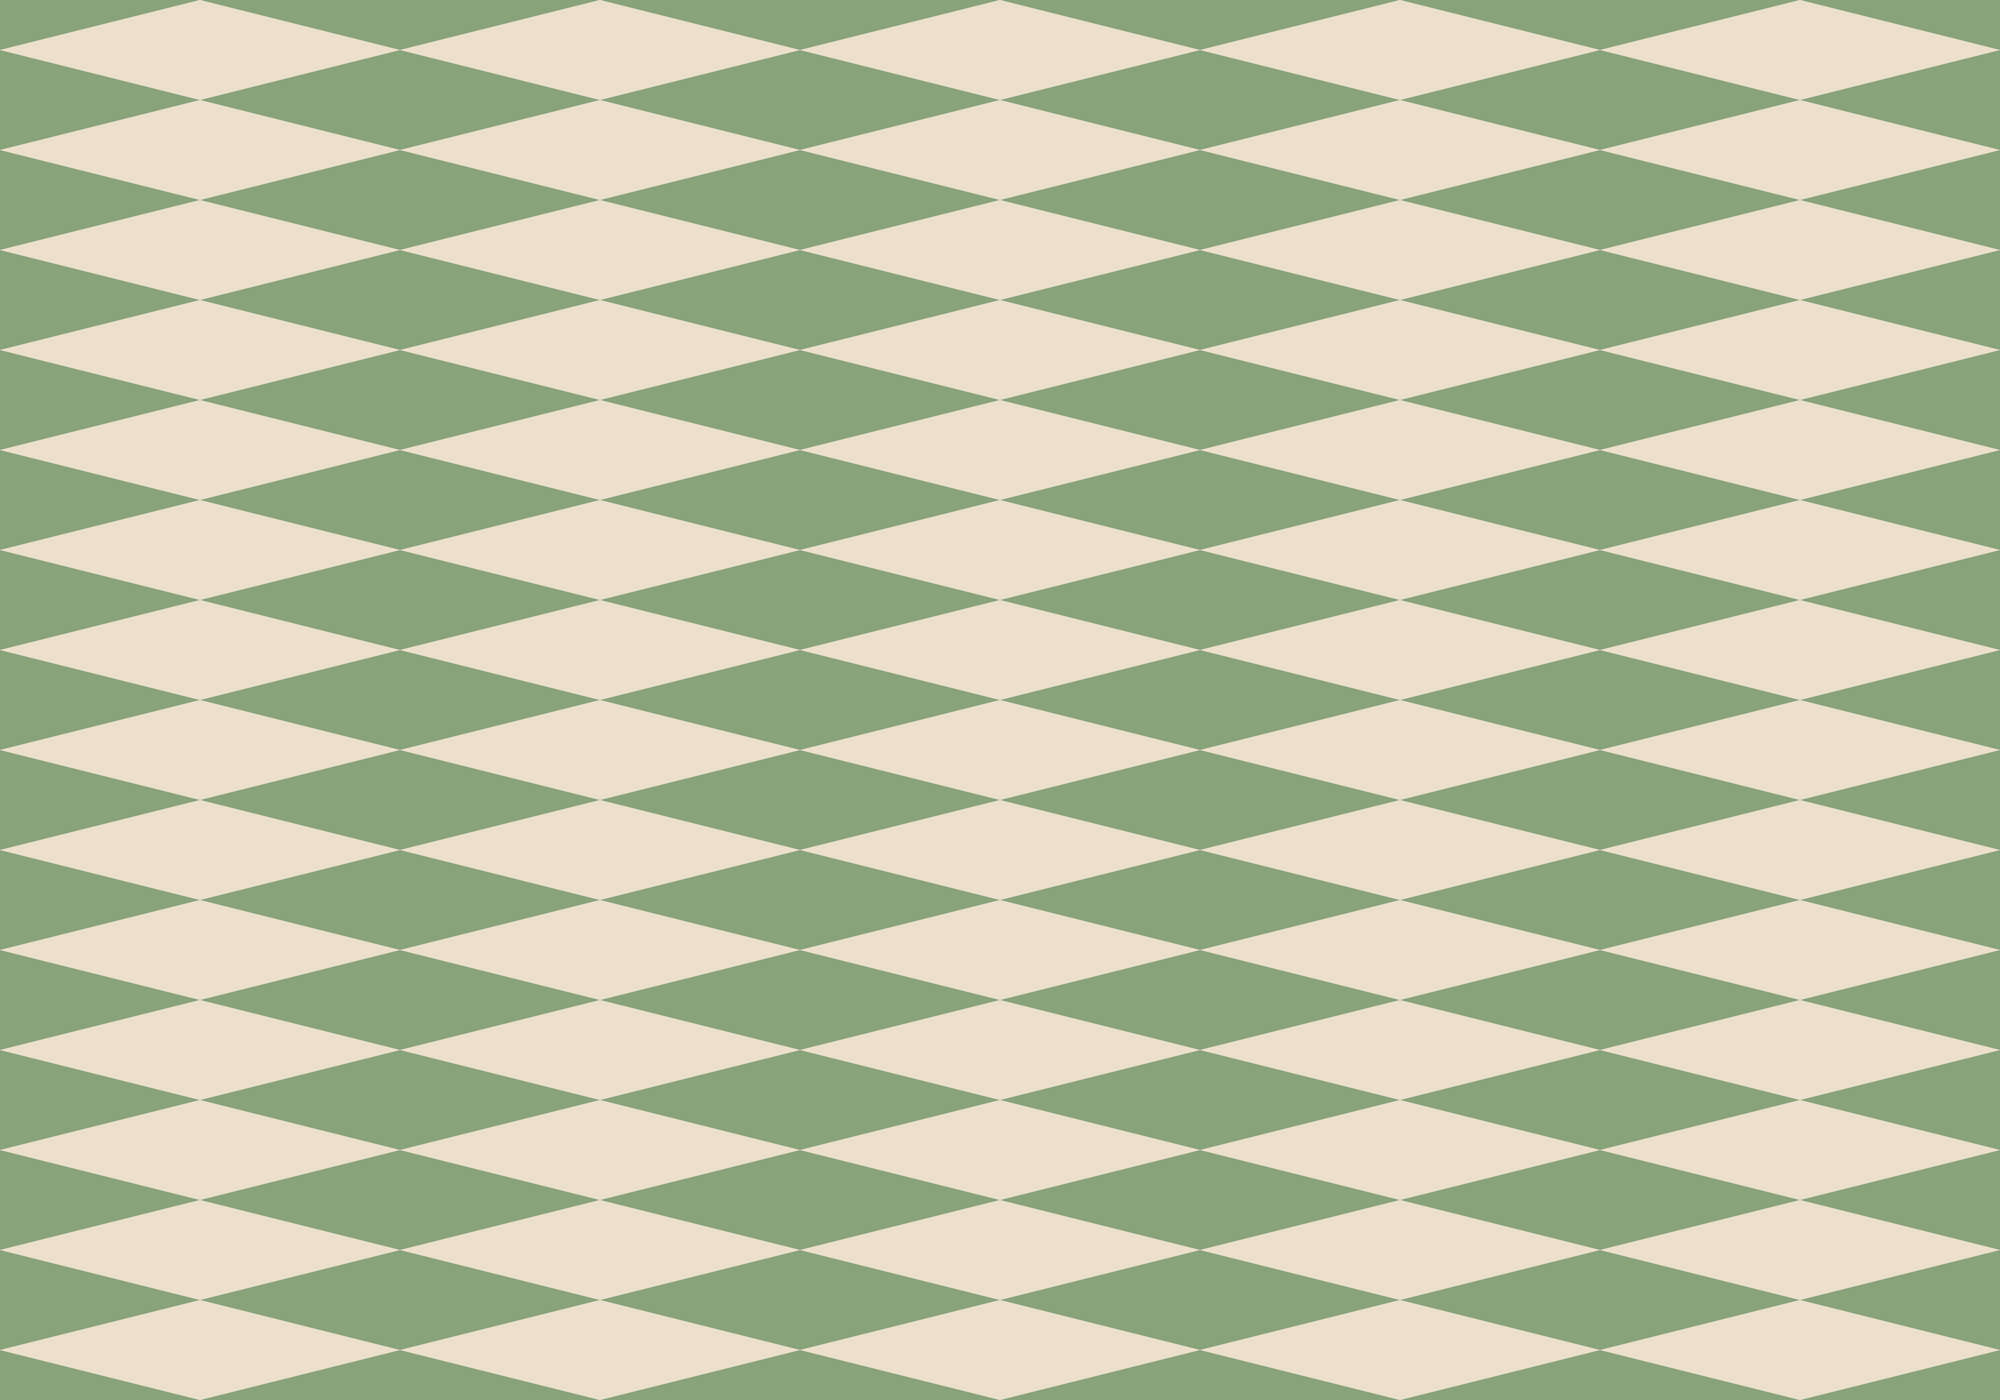             70s look diamond pattern wallpaper - Green, Beige | Matt smooth fleece
        